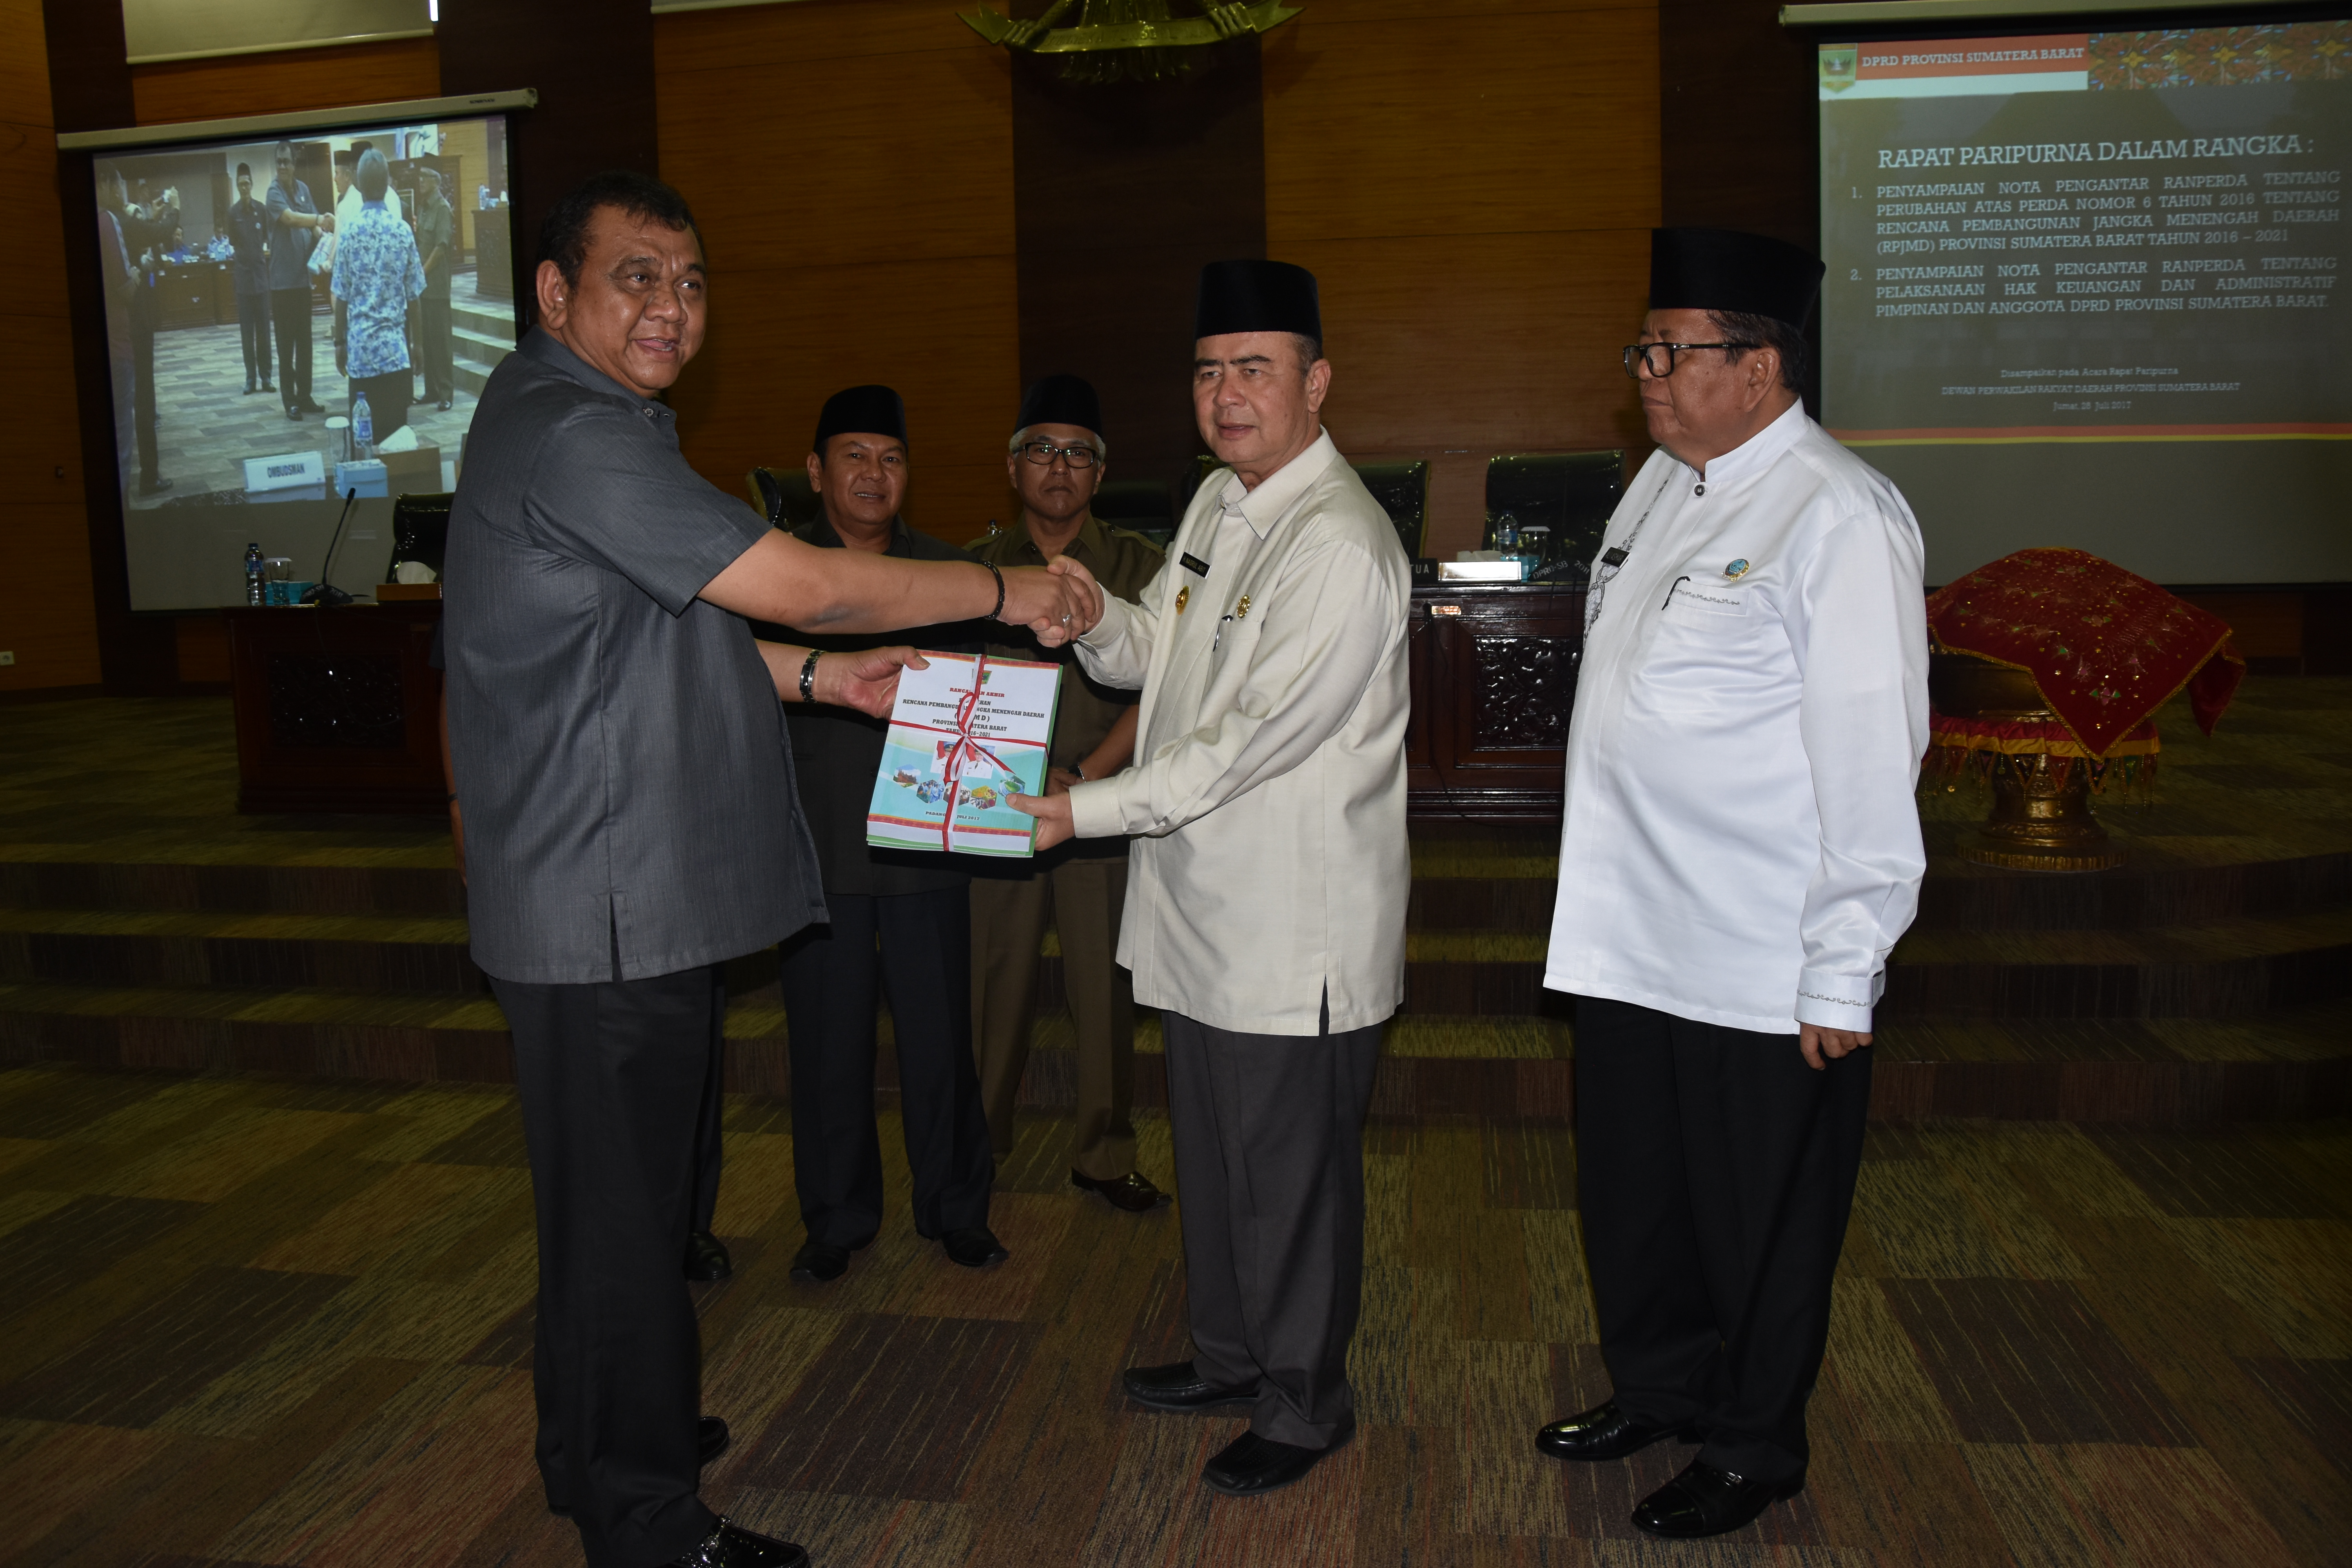 Rapat Paripurna DPRD Provinsi Sumatera Barat dalam rangka Penyampaian Nota Pengantar Gubernur